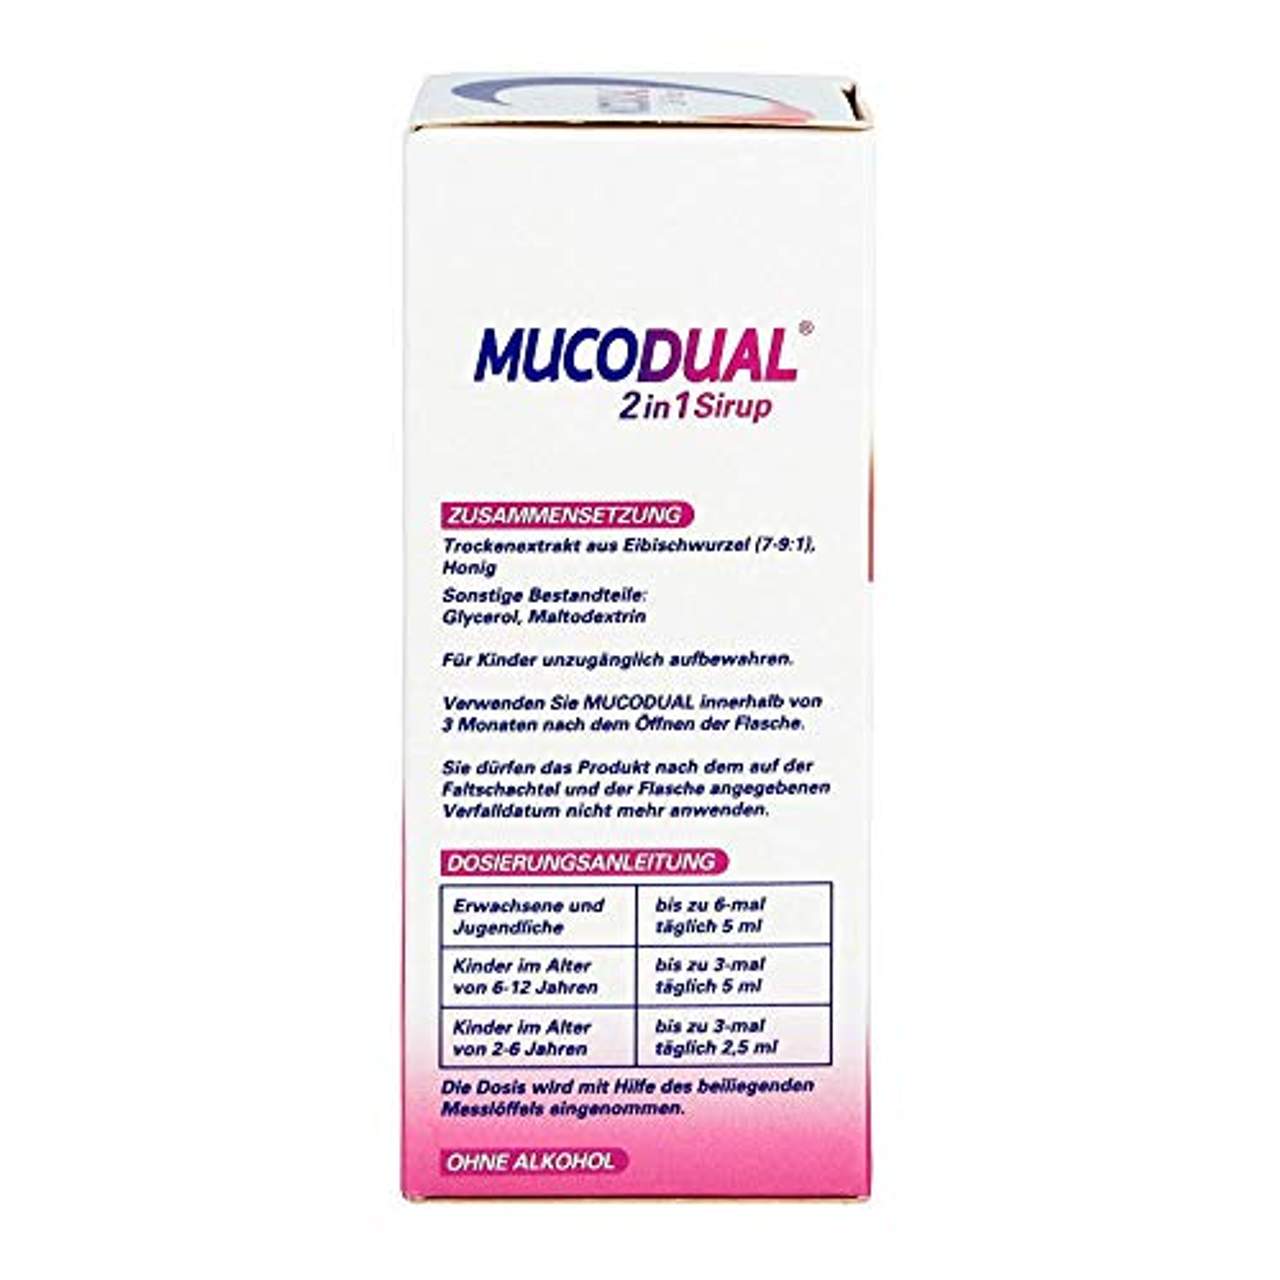 Mucosolvan Mucodual 2in1 Sirup